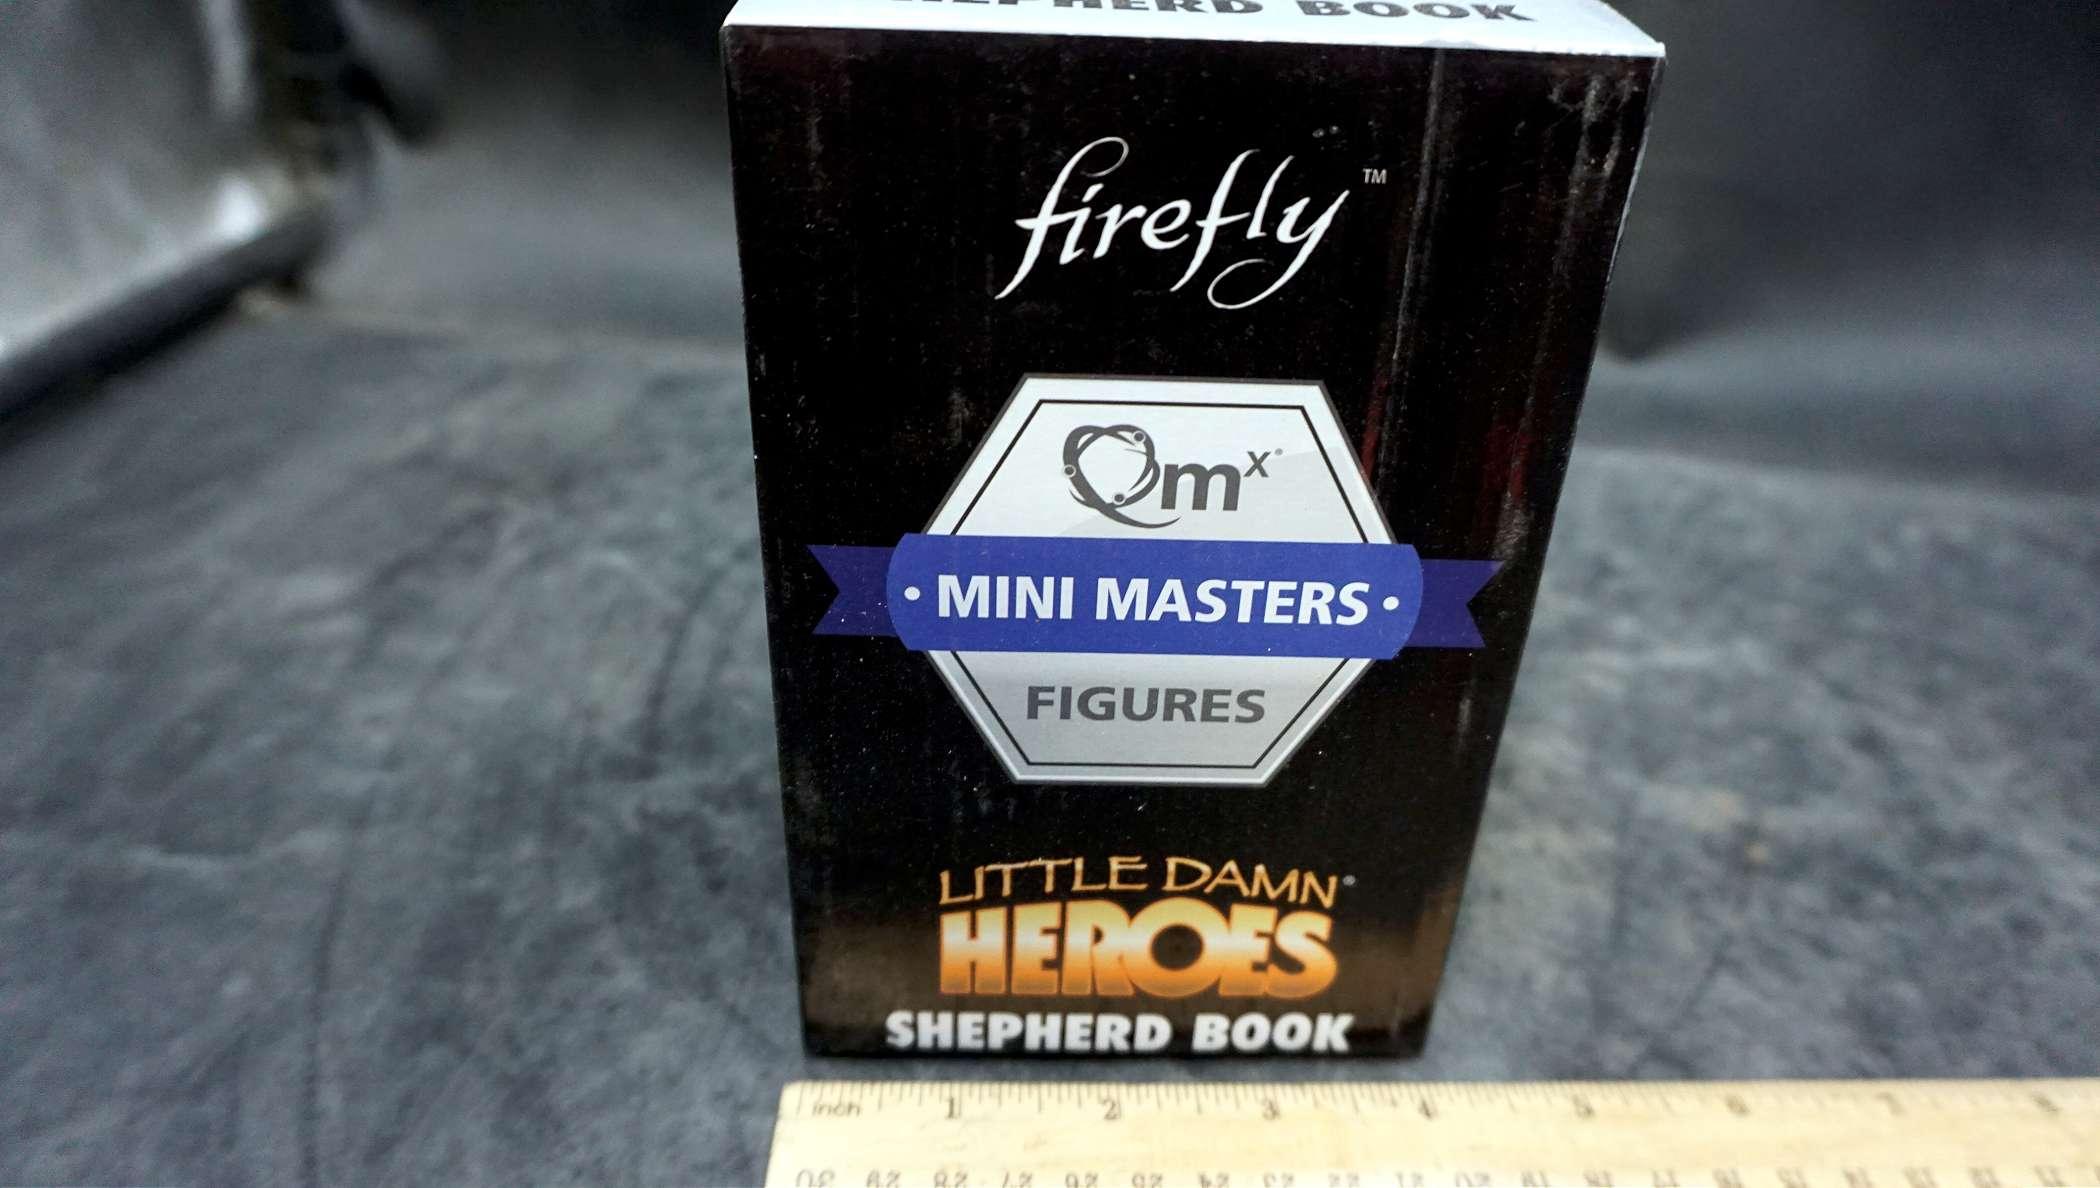 QM Firefly Mini Masters Little Damn Heroes Shepherd Book Figurine